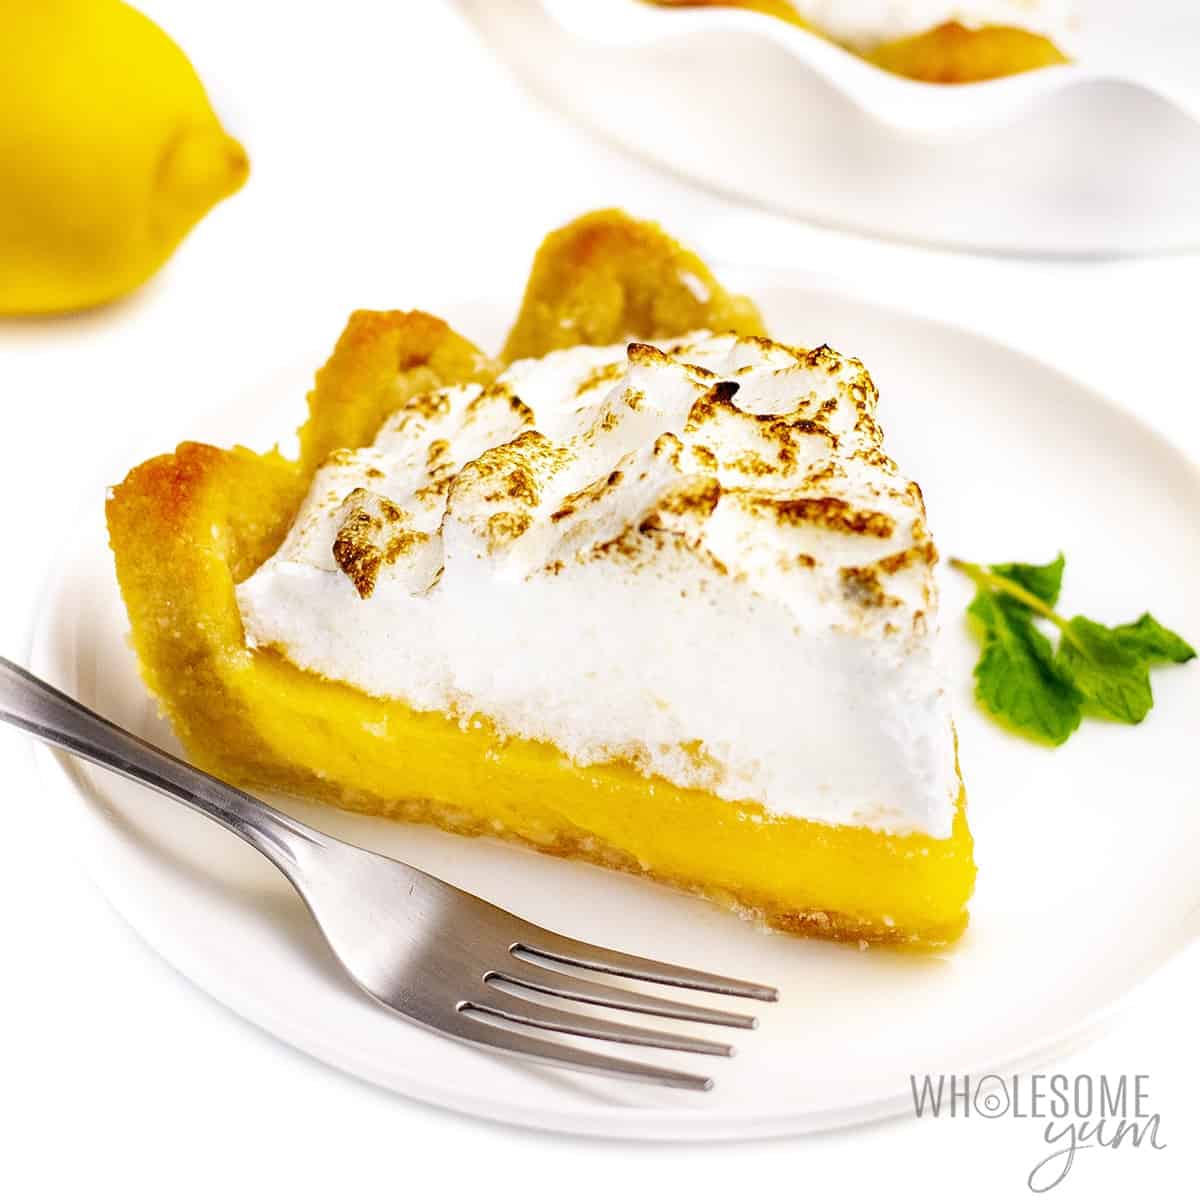 Slice of keto lemon meringue pie on a plate with a fork.